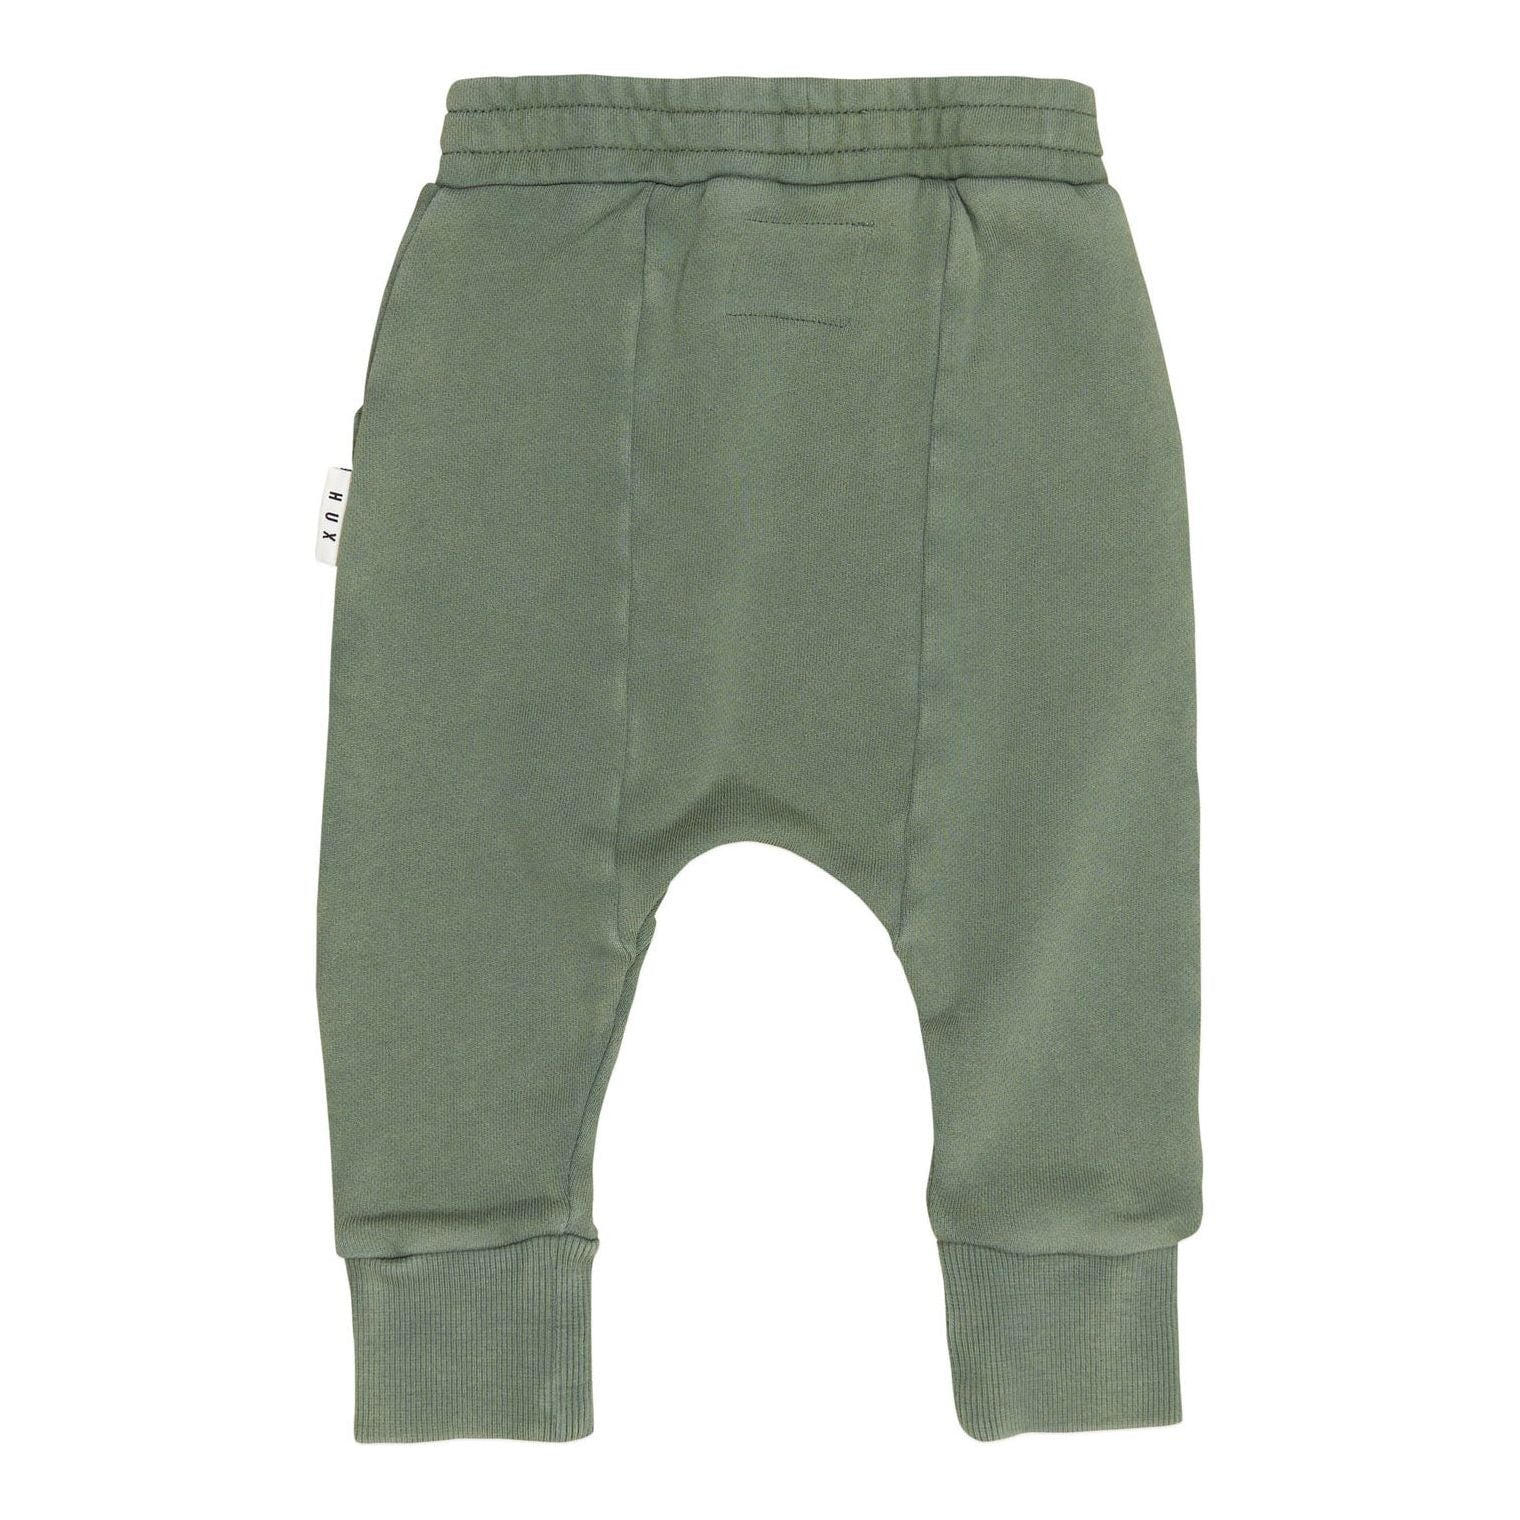 Vintage Green Drop Crotch Pant